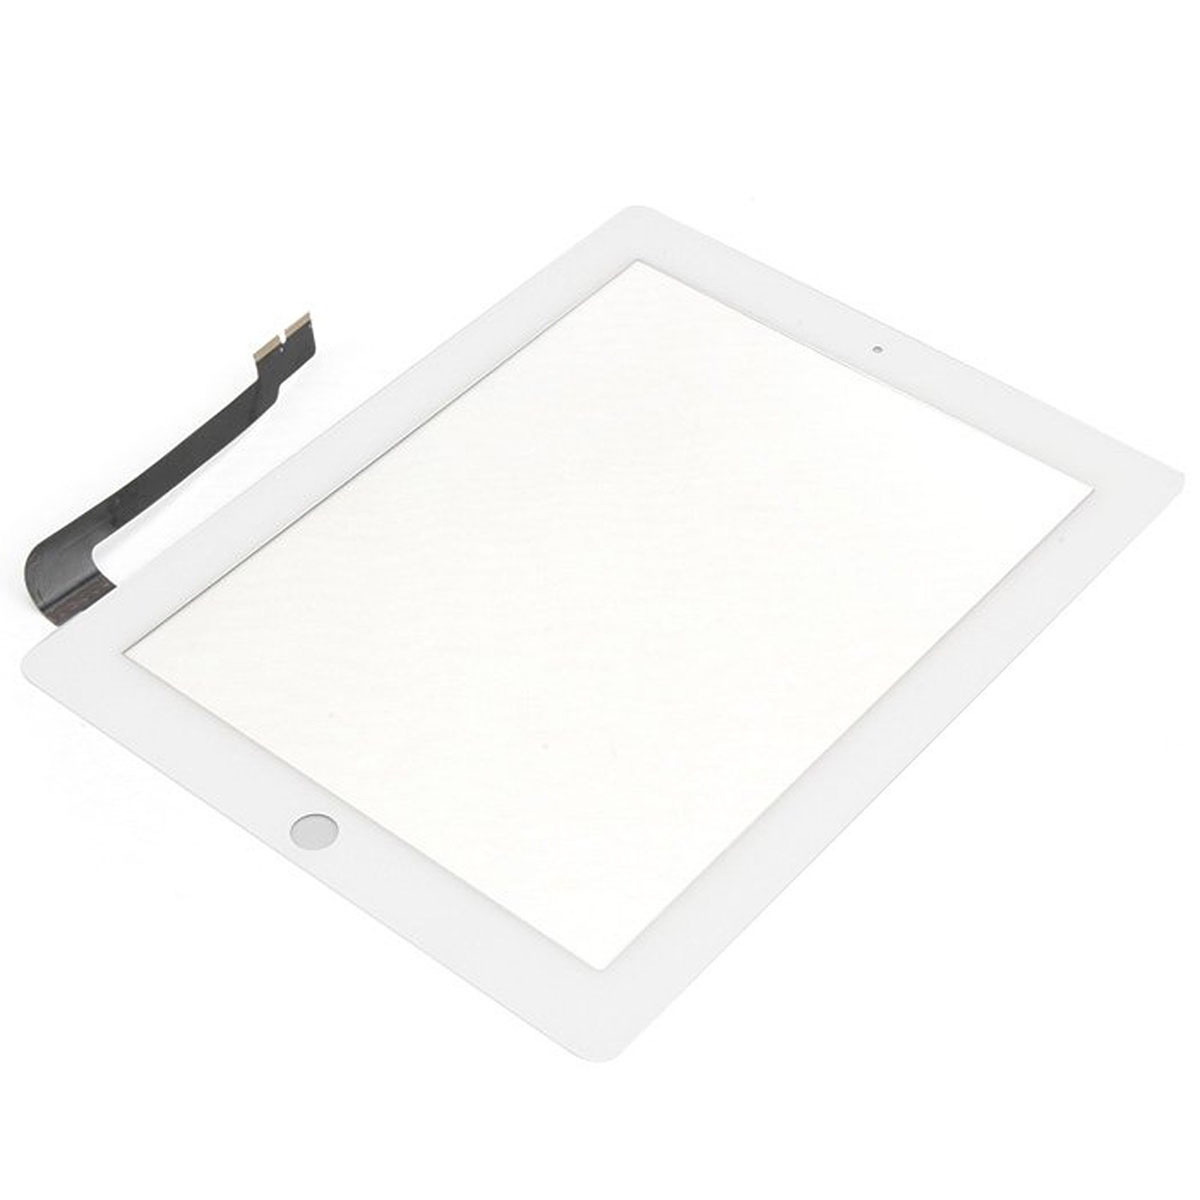 Тачскрин, сенсорное стекло для APPLE iPad 3 NEW, iPad 4, цвет белый